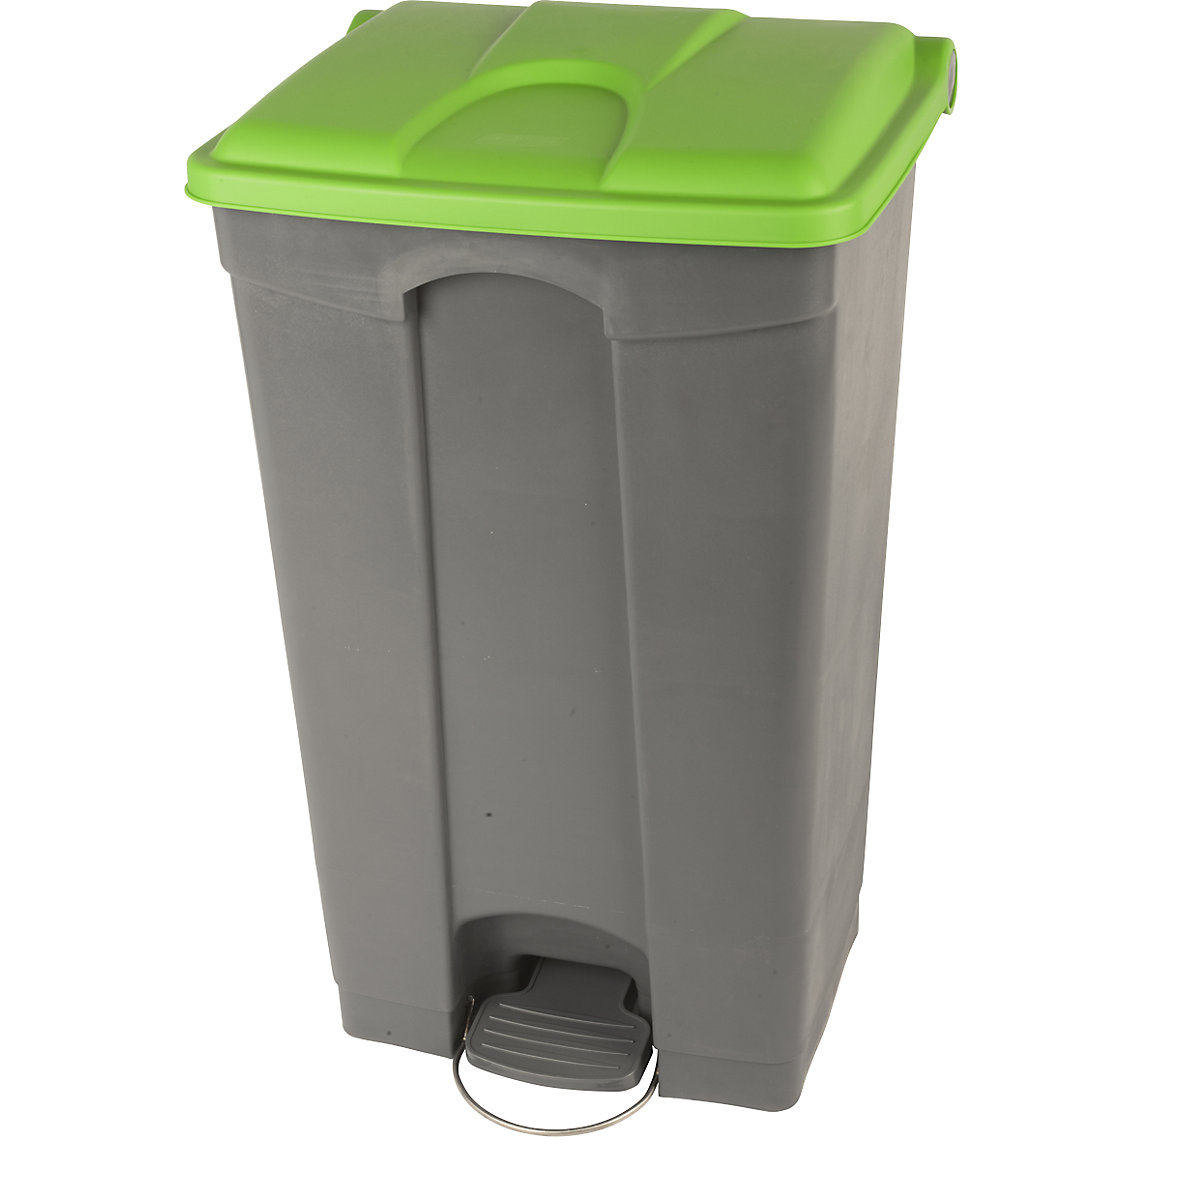 EUROKRAFTbasic – Pedal waste collector, capacity 90 l, WxHxD 505 x 790 x 410 mm, grey, green lid